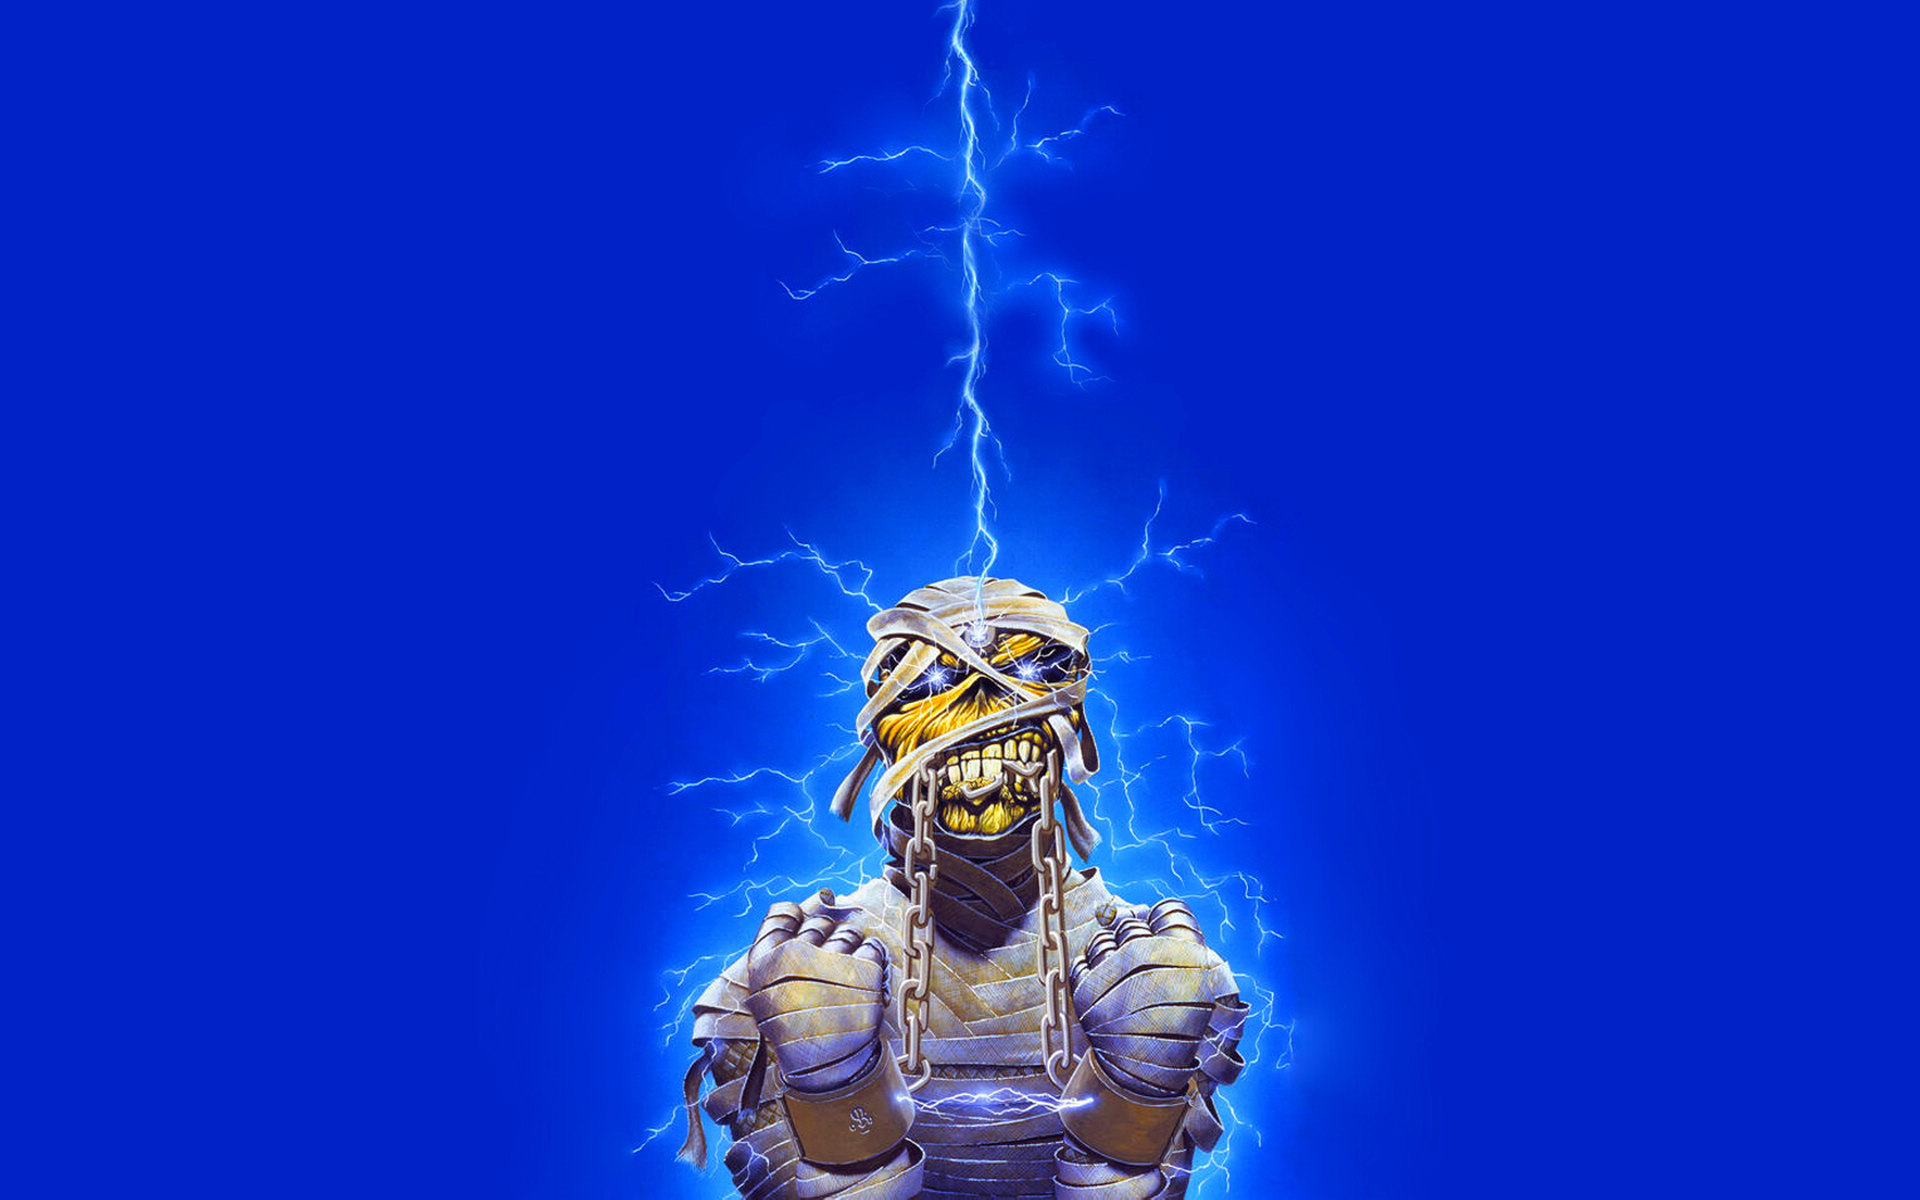 Iron Maiden HD Background Wallpaper